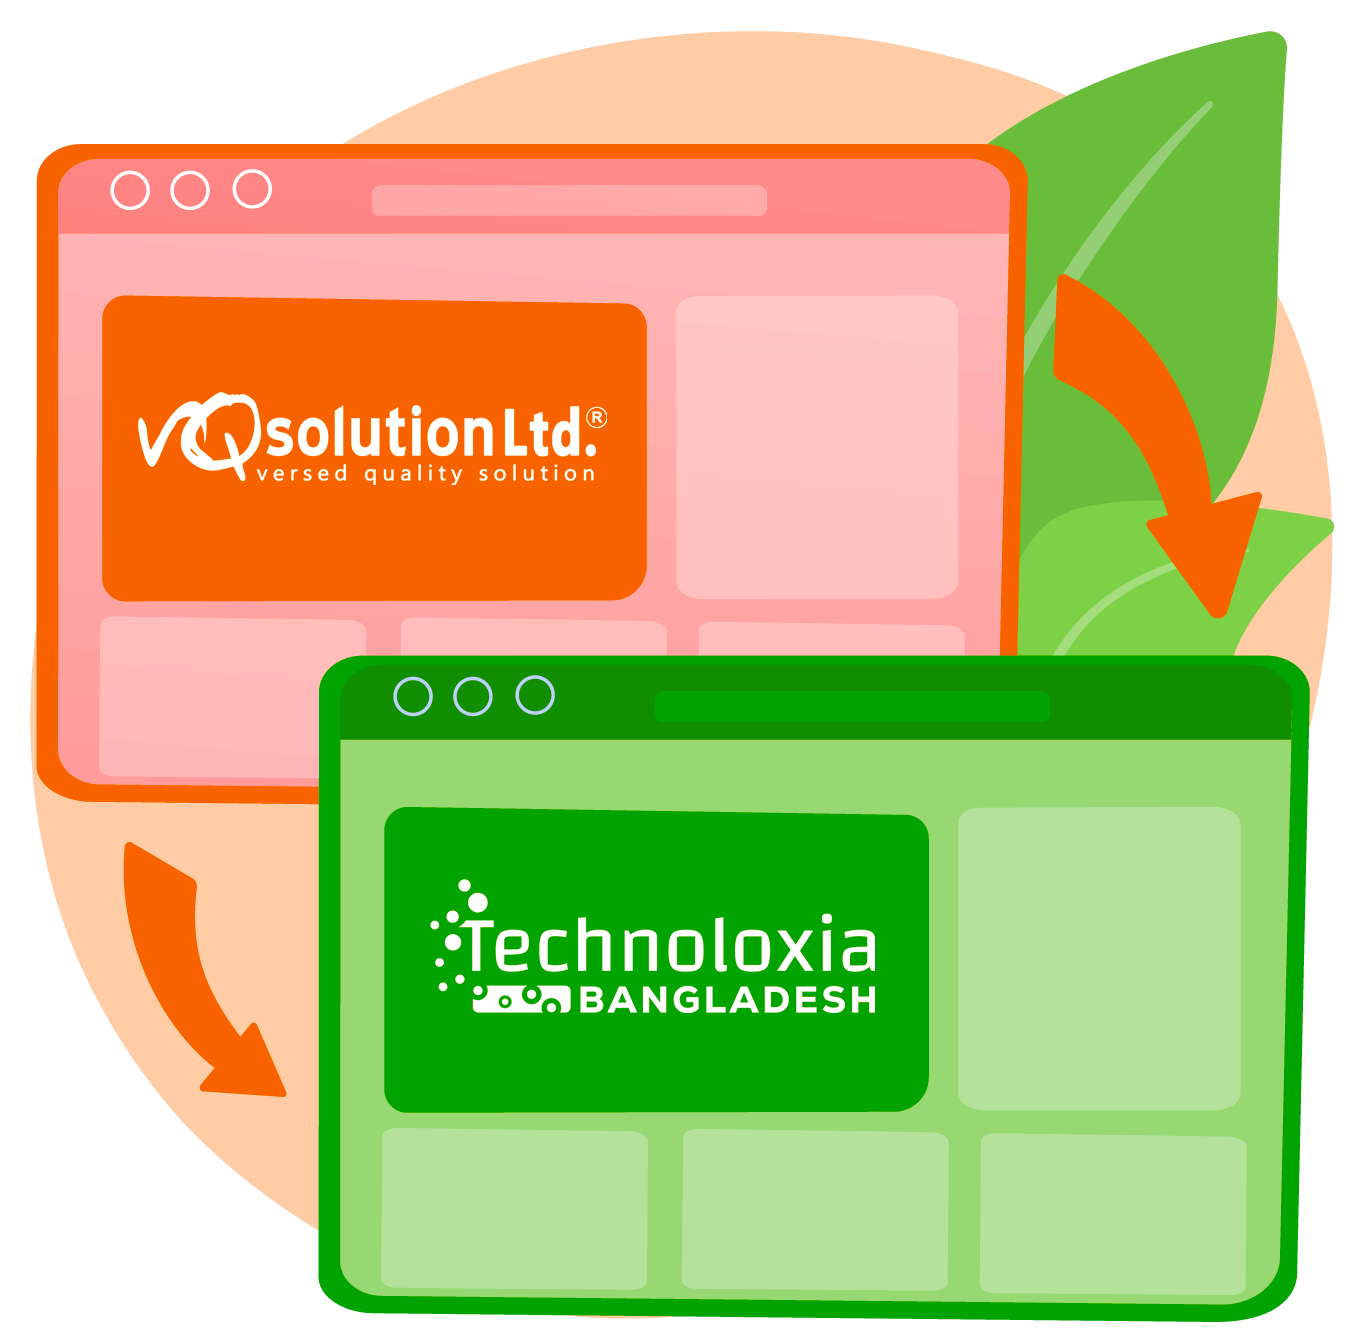 vQsolution now Technoloxia Bangladesh!